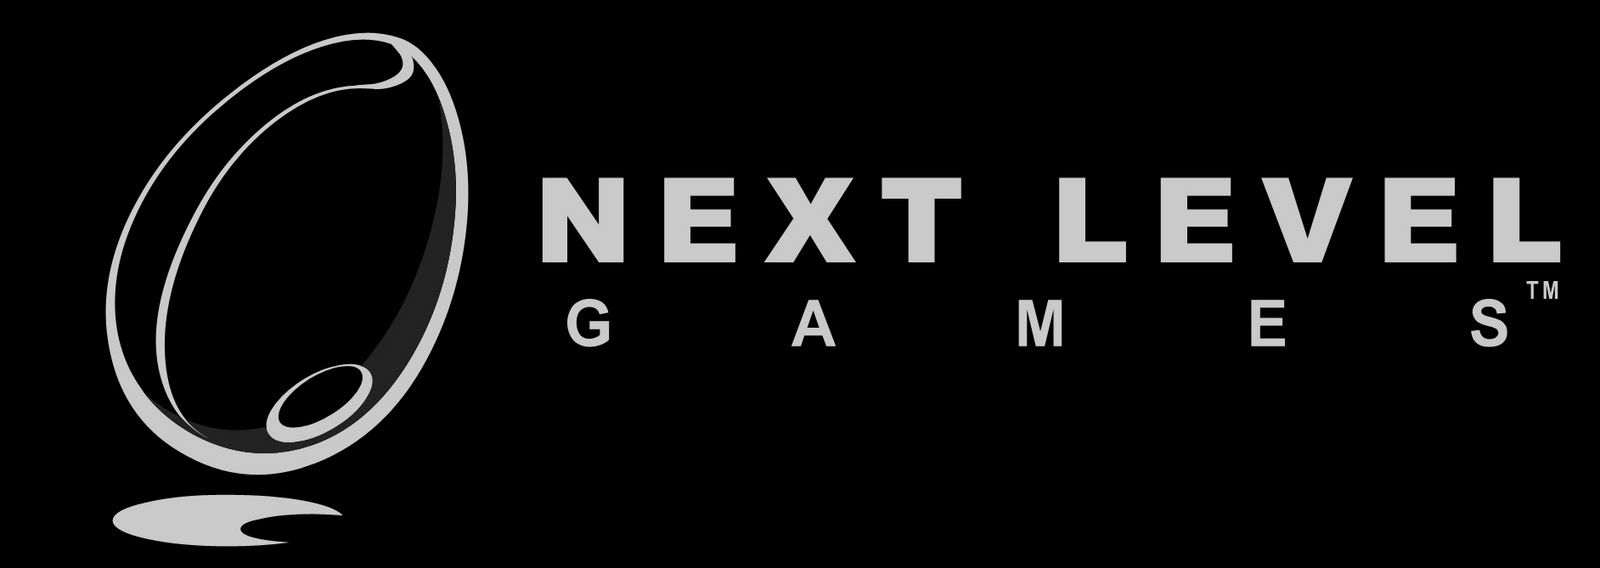 Next level games Logos